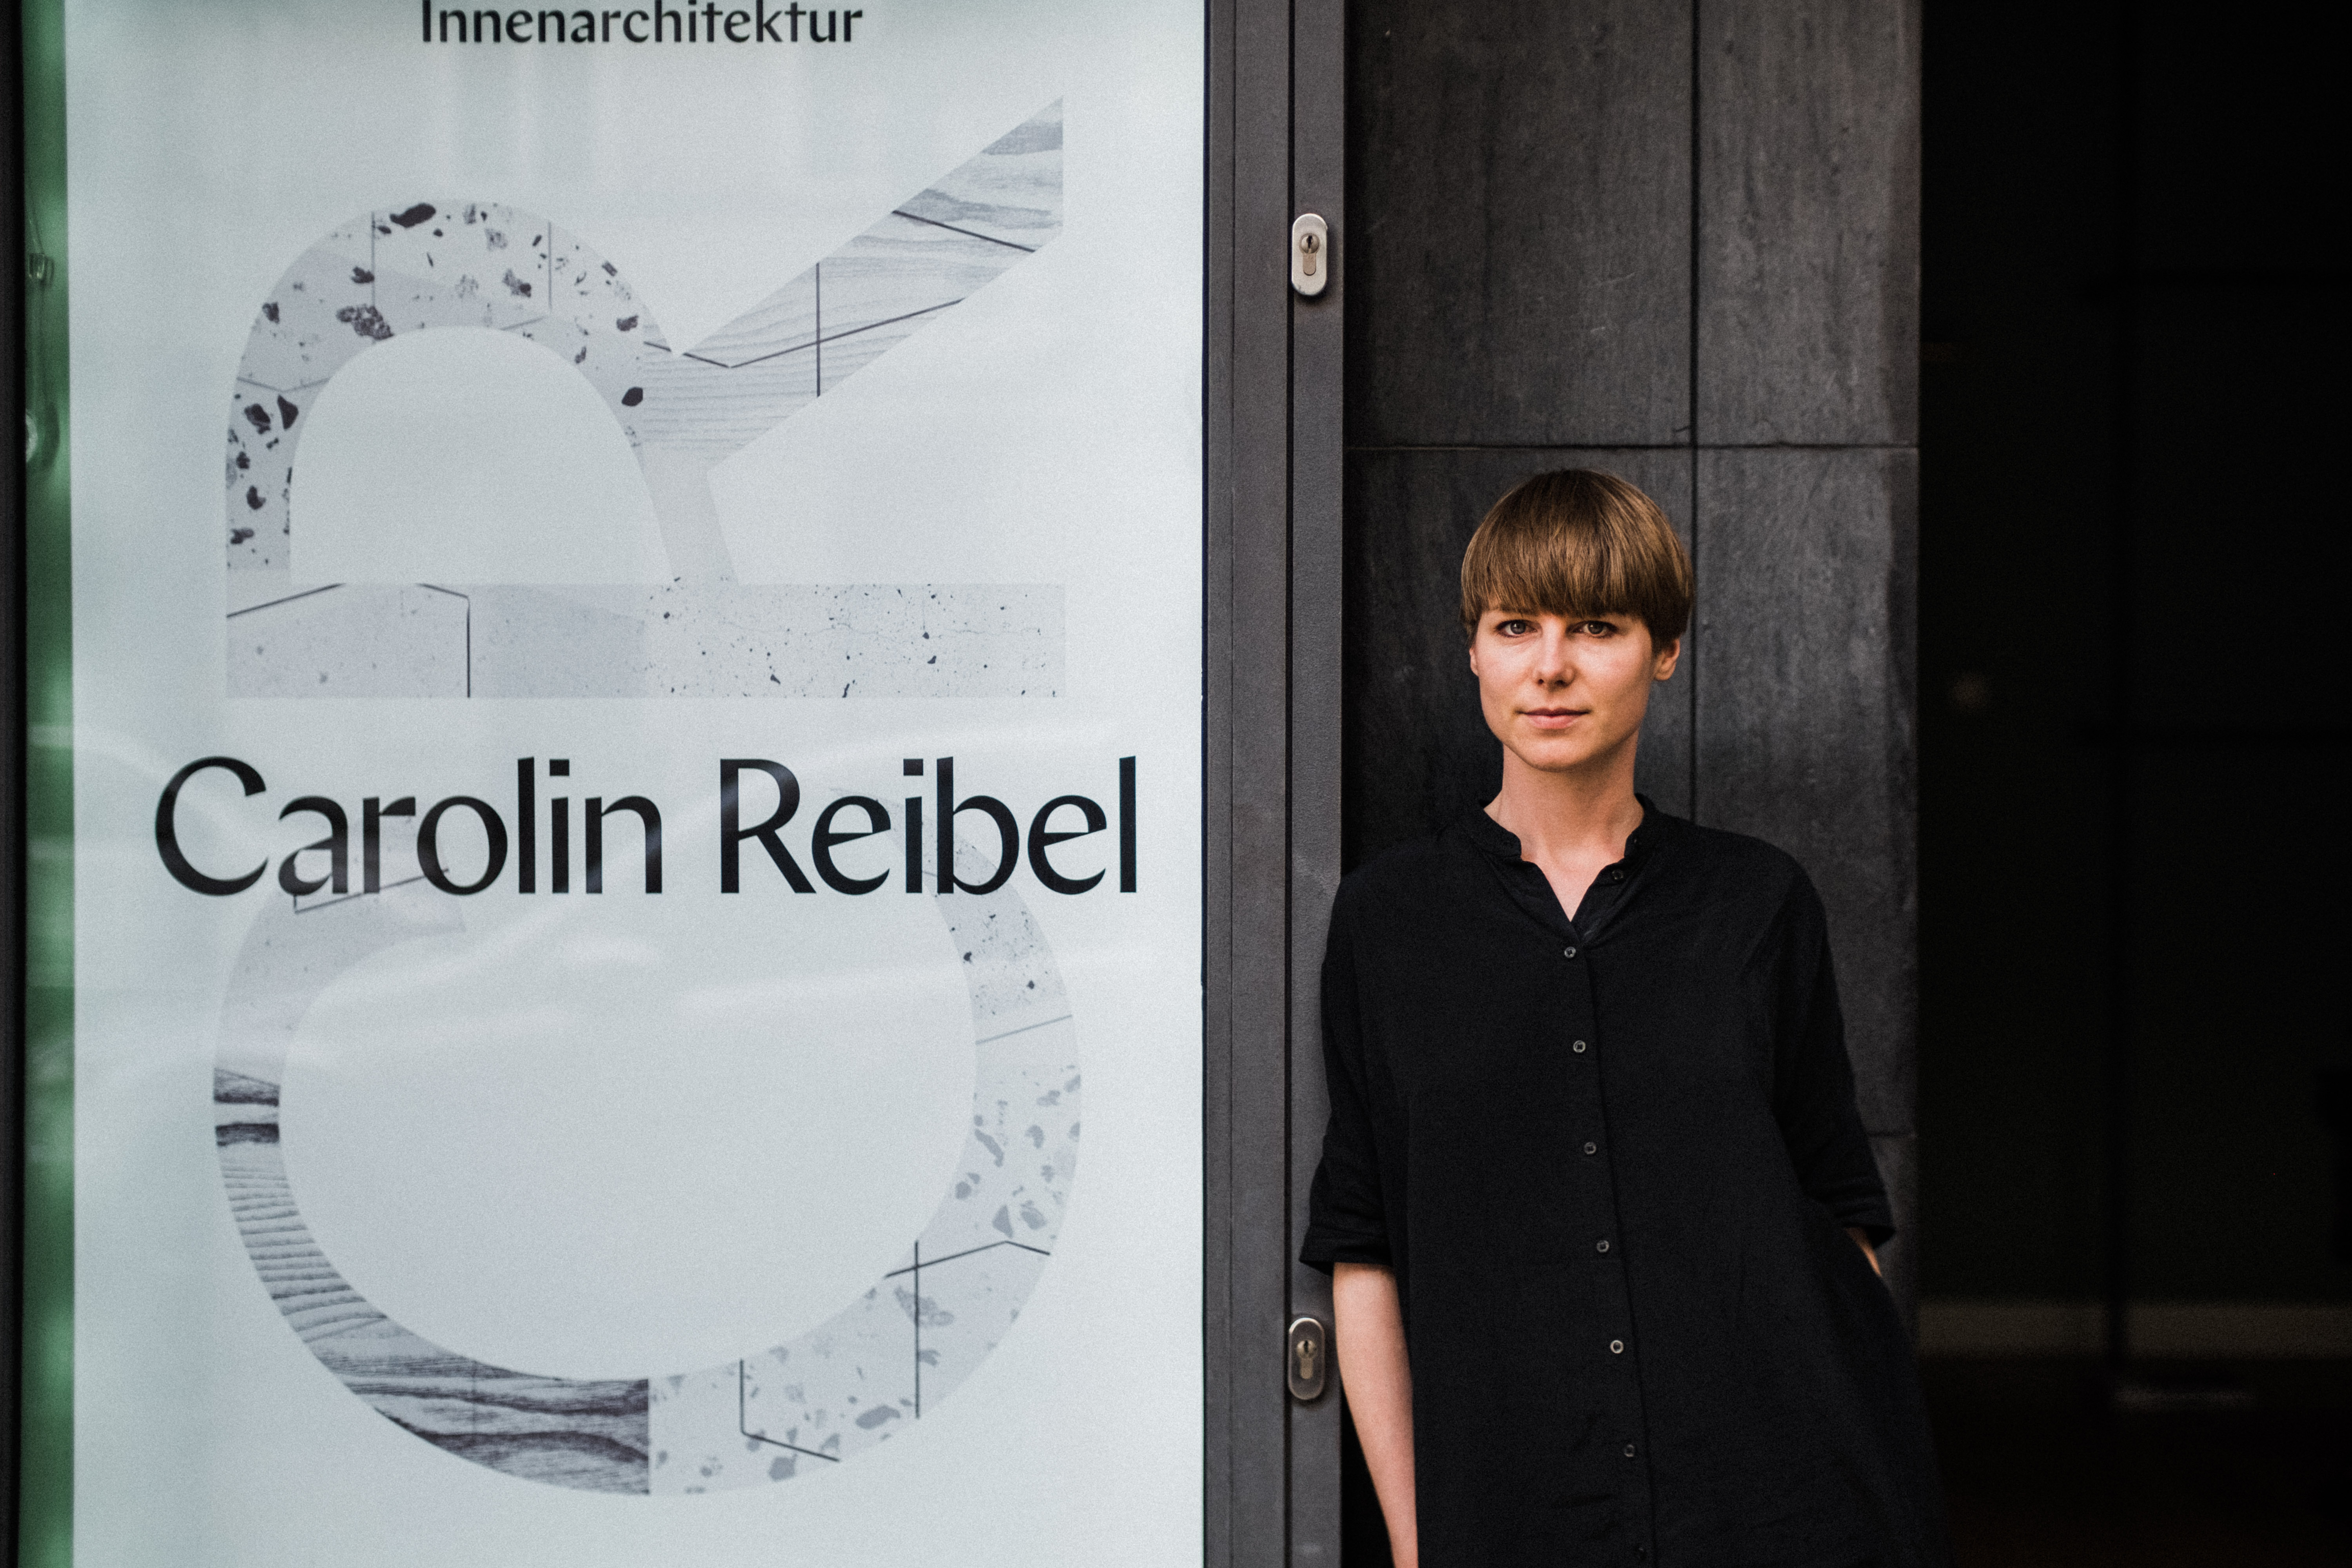 Carolin Reibel - Innenarchitektur Homepage